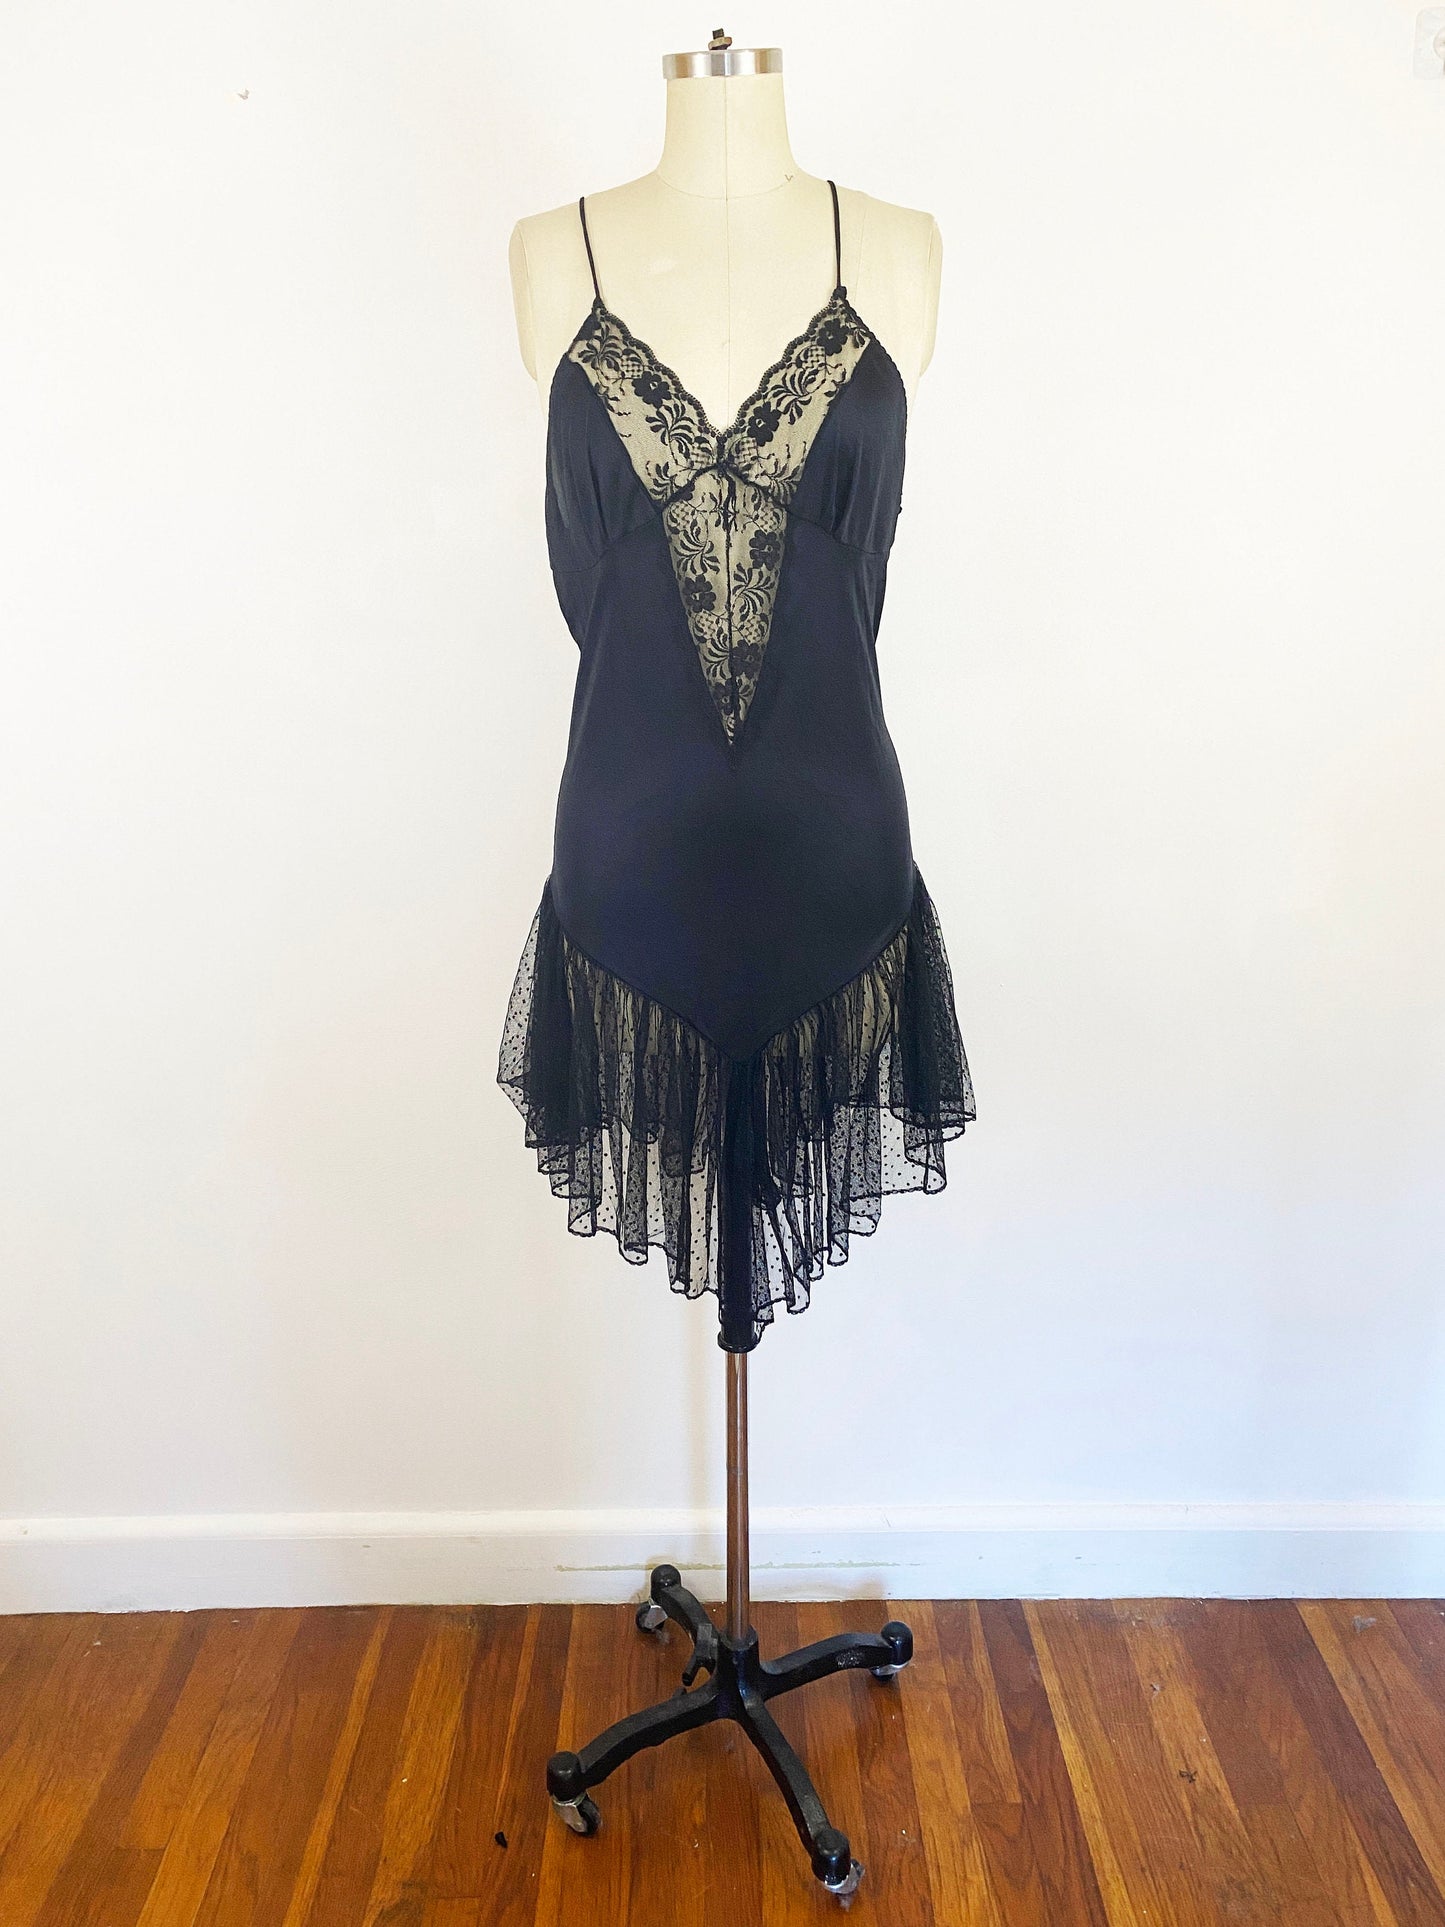 1980-1990s Black Vamp Nylon Nightgown Teddy / Black Lace Slip Sexy Lingerie Romantic Goth Naught Nighty / Size Large